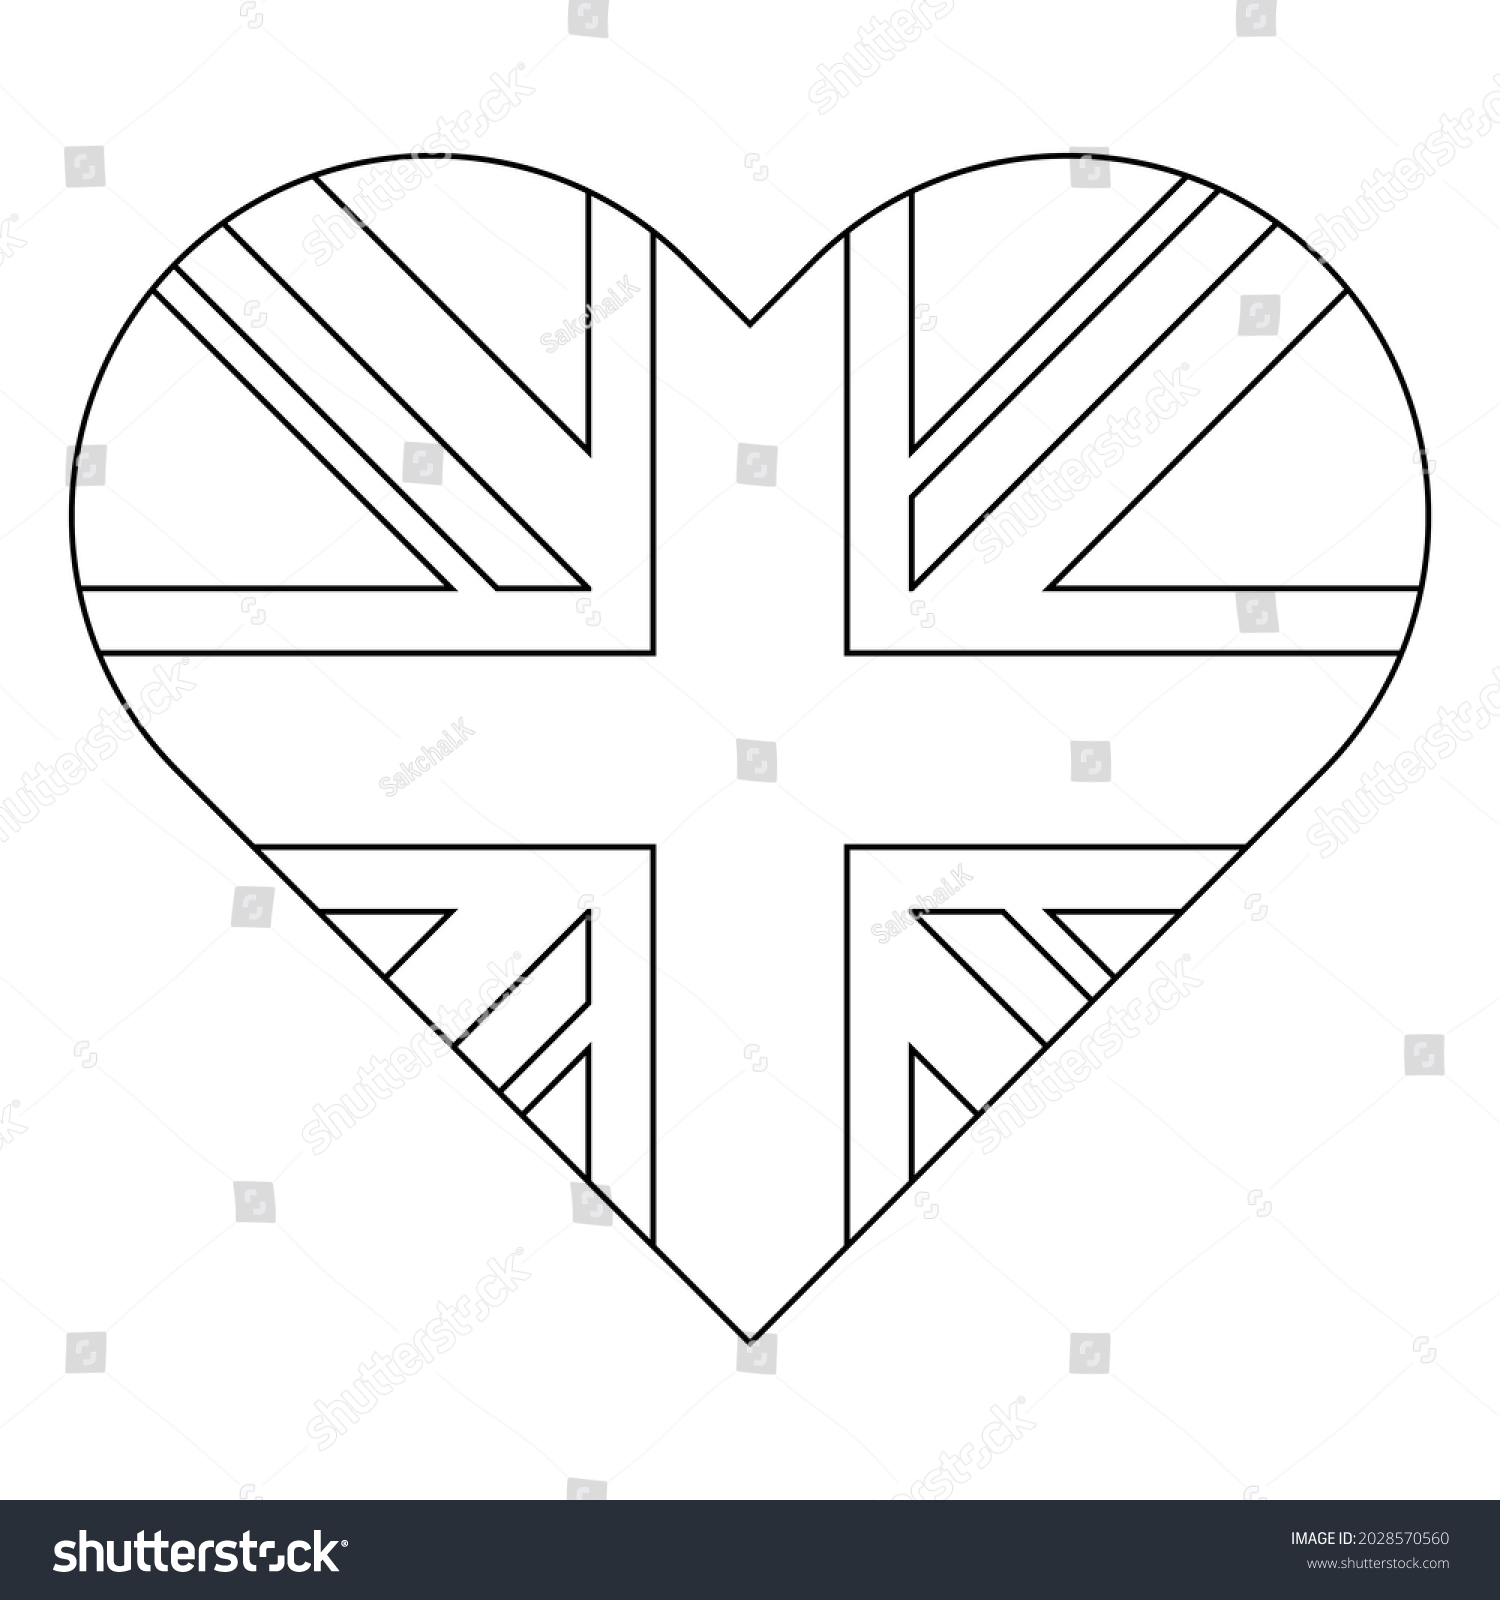 SVG of heart shape outline icon of great britain flag. vector illustration svg